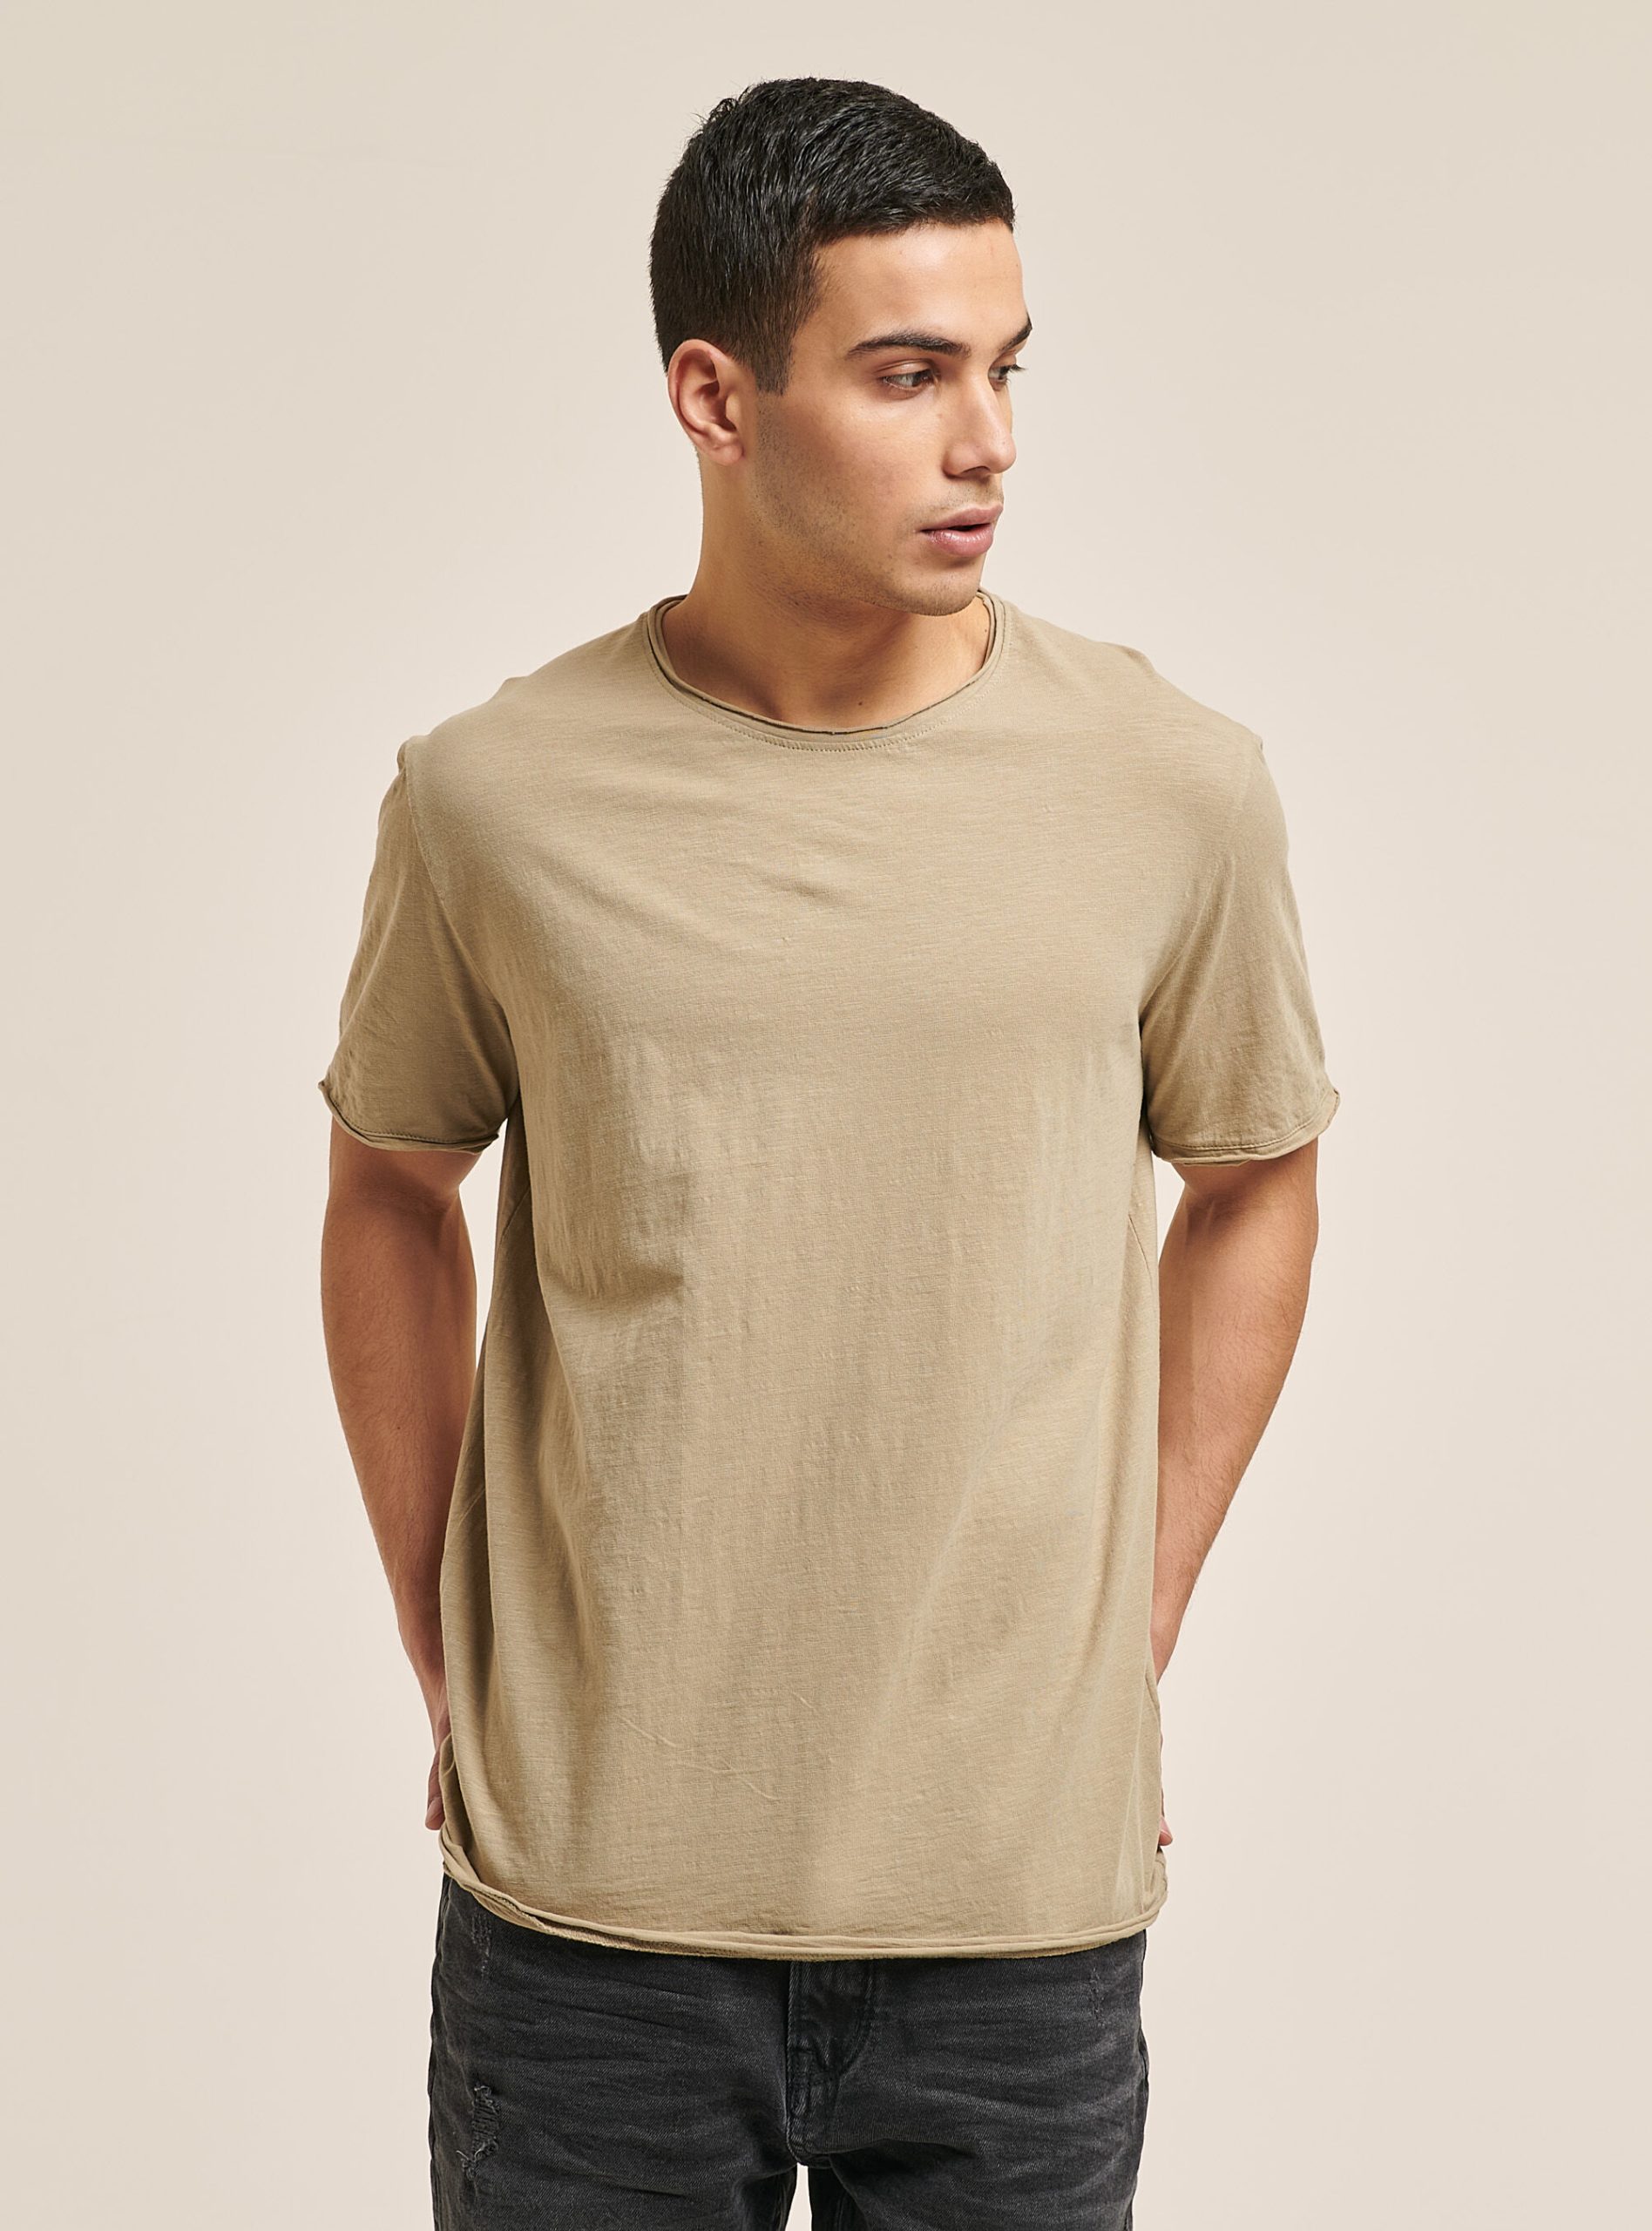 Einfarbiges T-Shirt Aus Baumwolle Alcott Männer Promotion T-Shirts C1150 Sand – 1